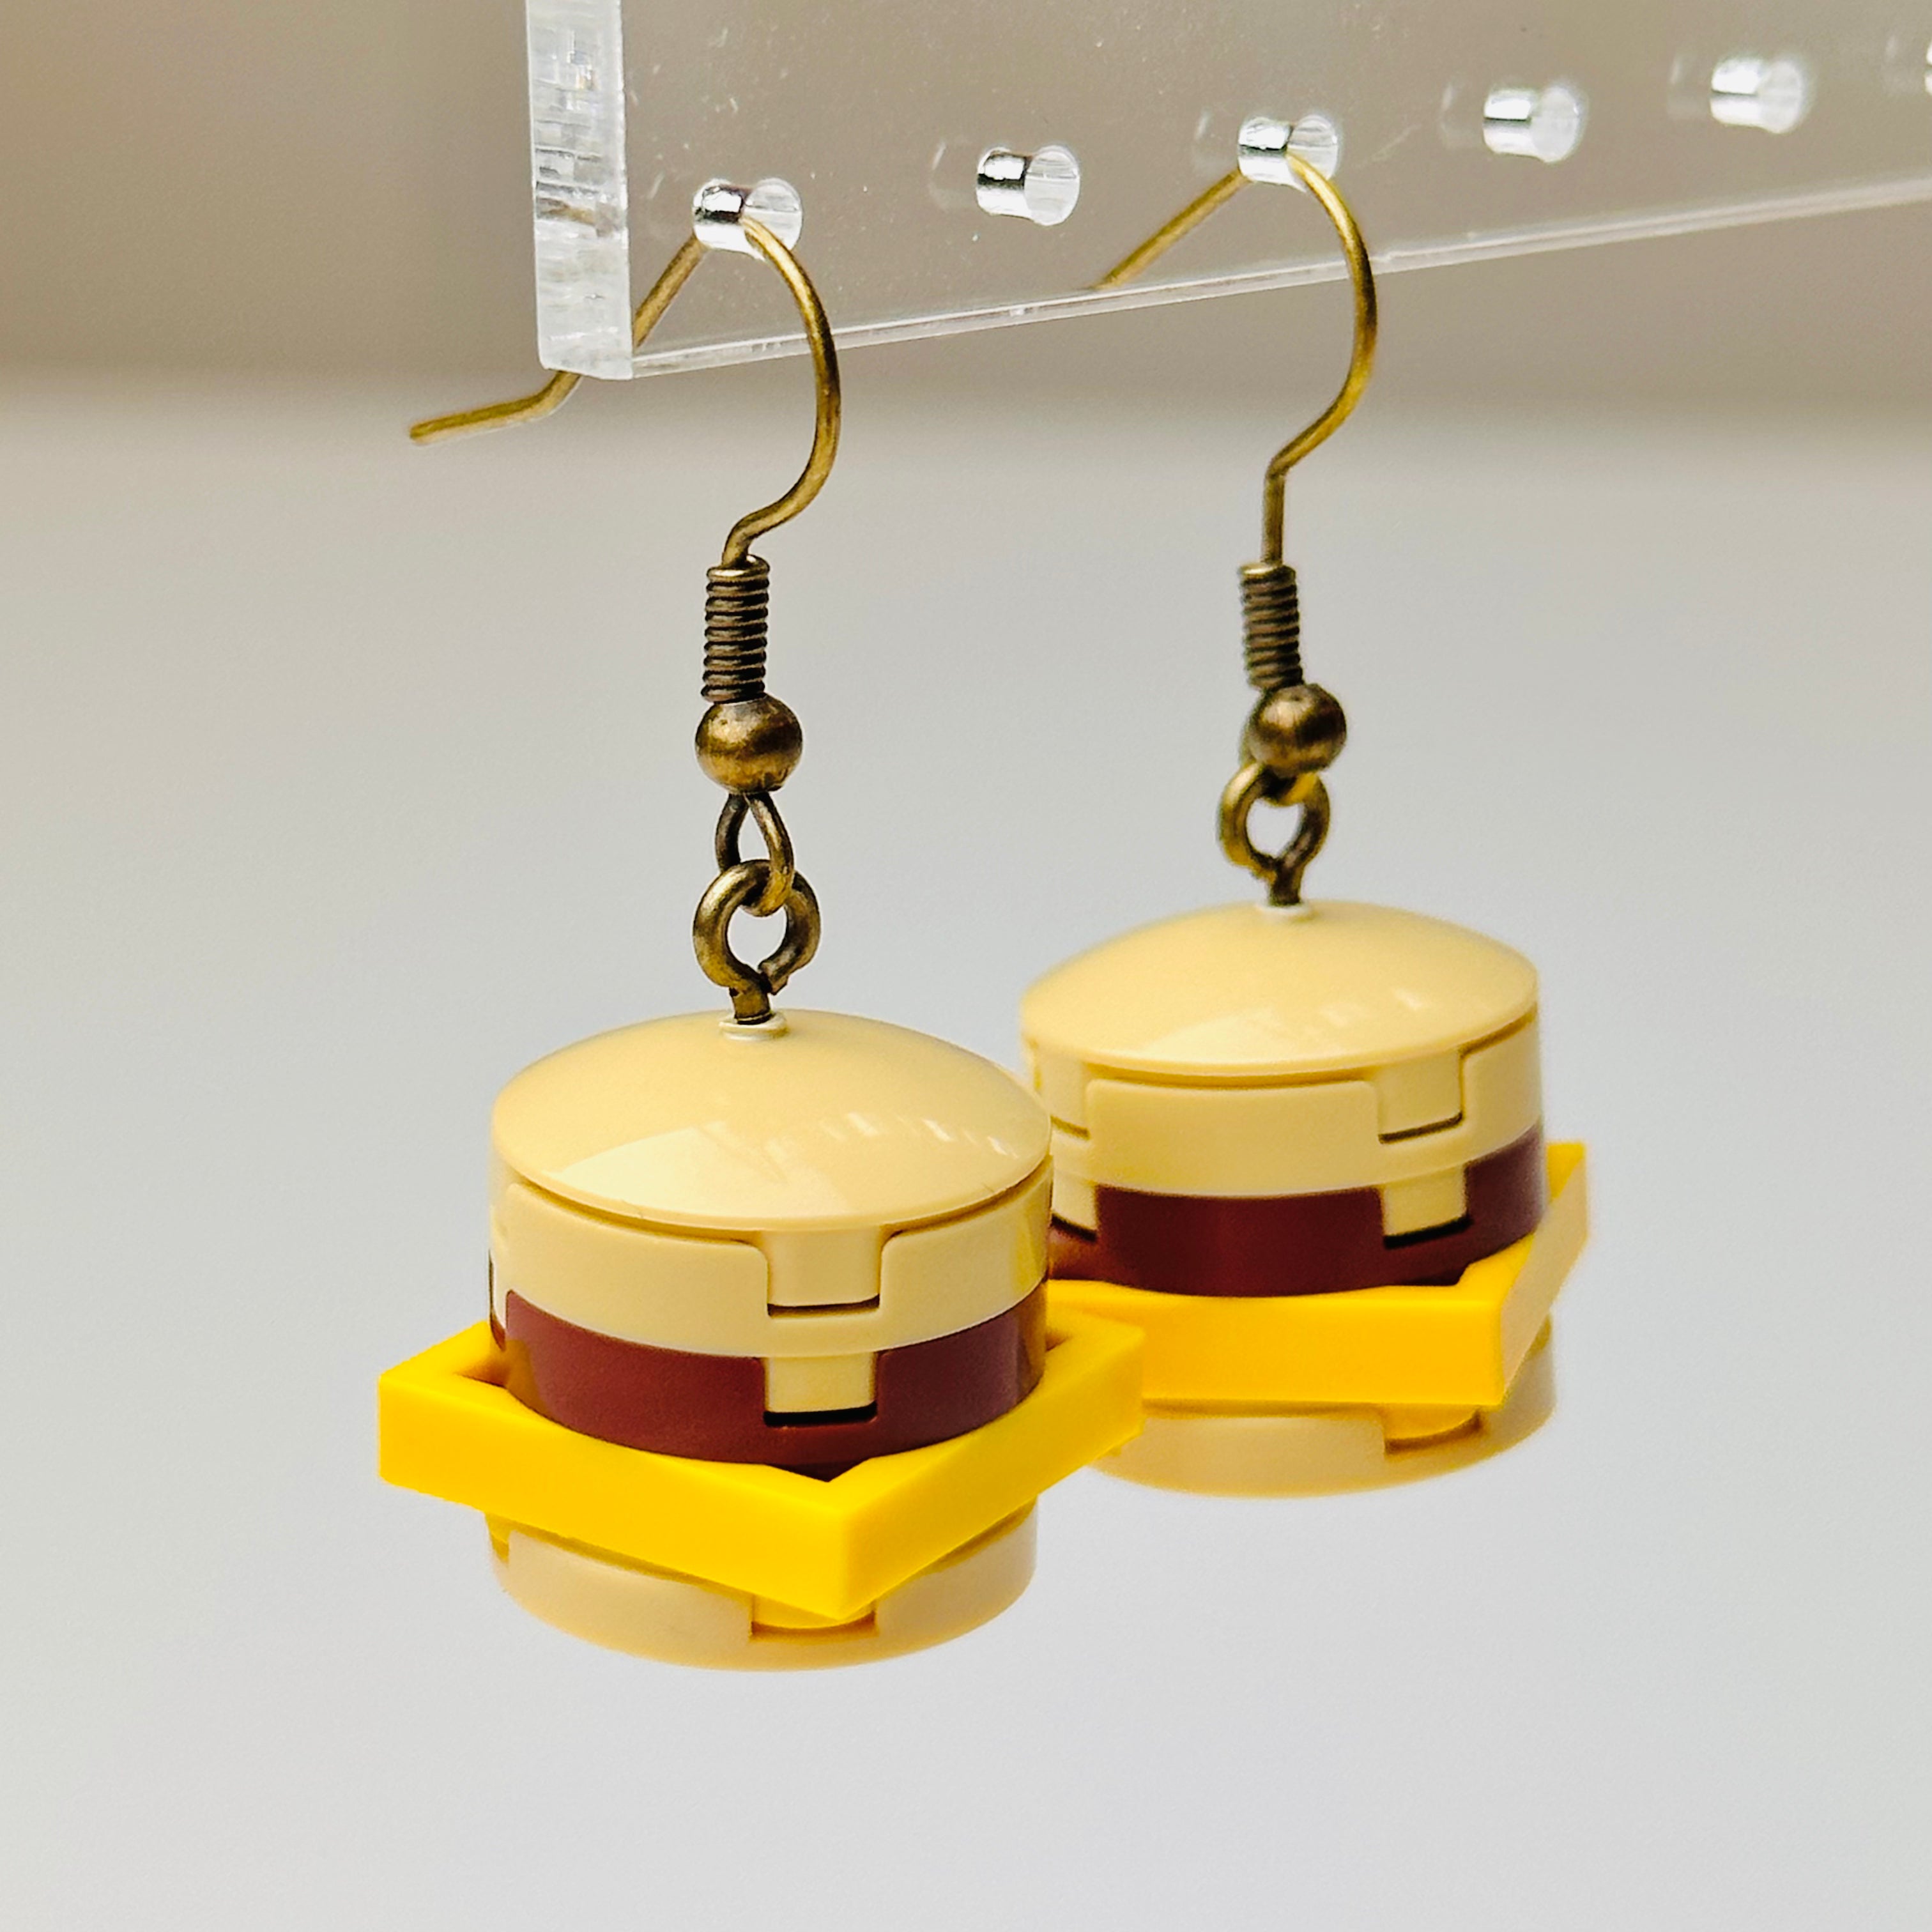 StudBee - Cheesy Cheeseburger Brick Built Funny Food Earrings, Handmade with Lego®